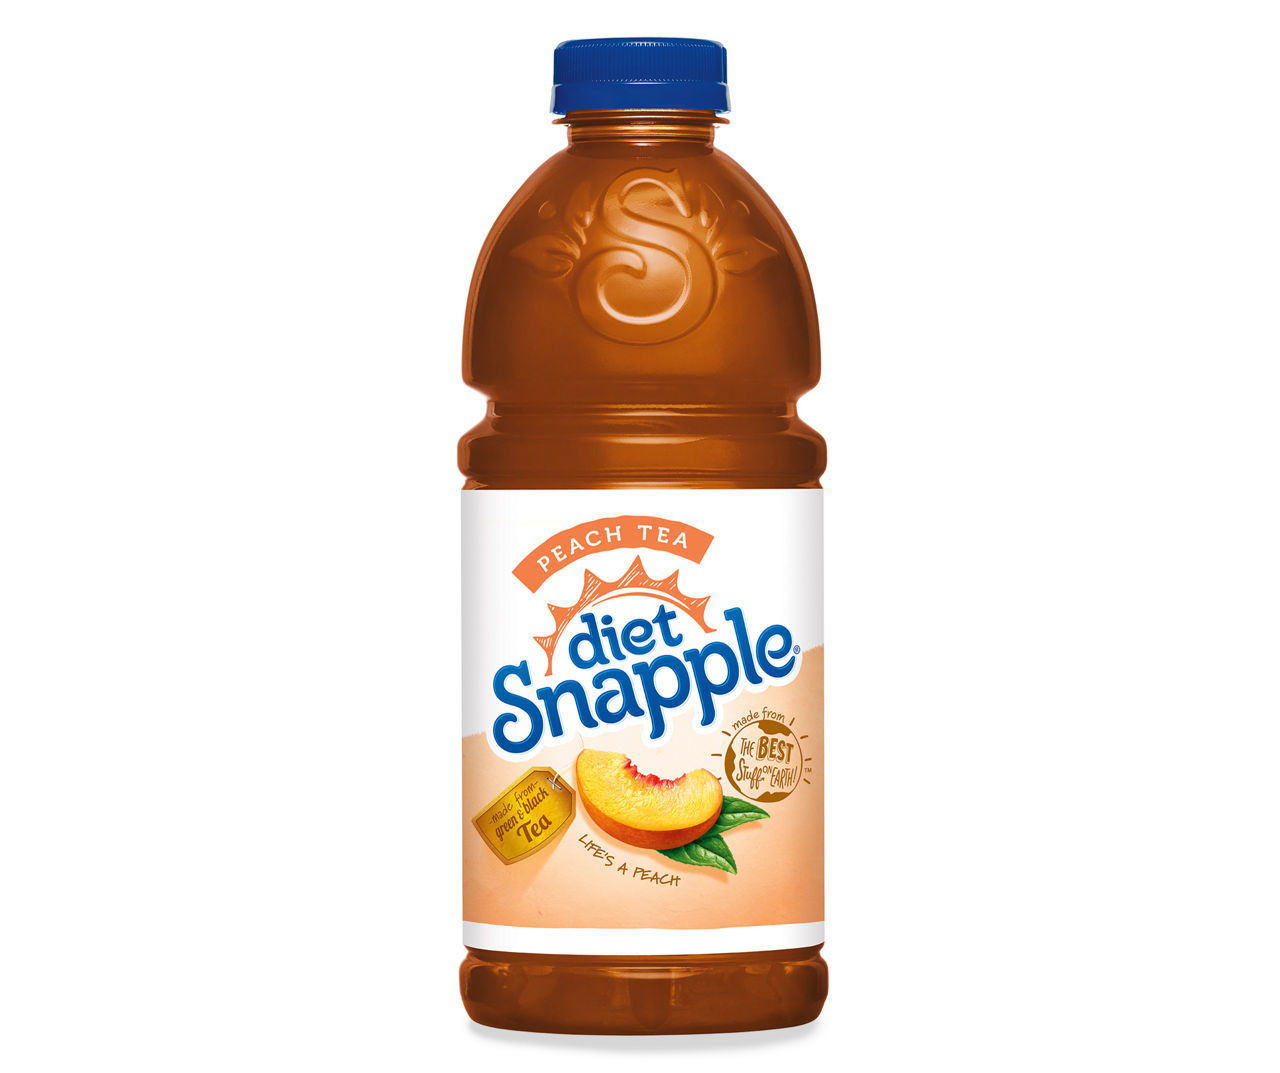 Snapple Peach Tea, 32 Fl Oz Bottle